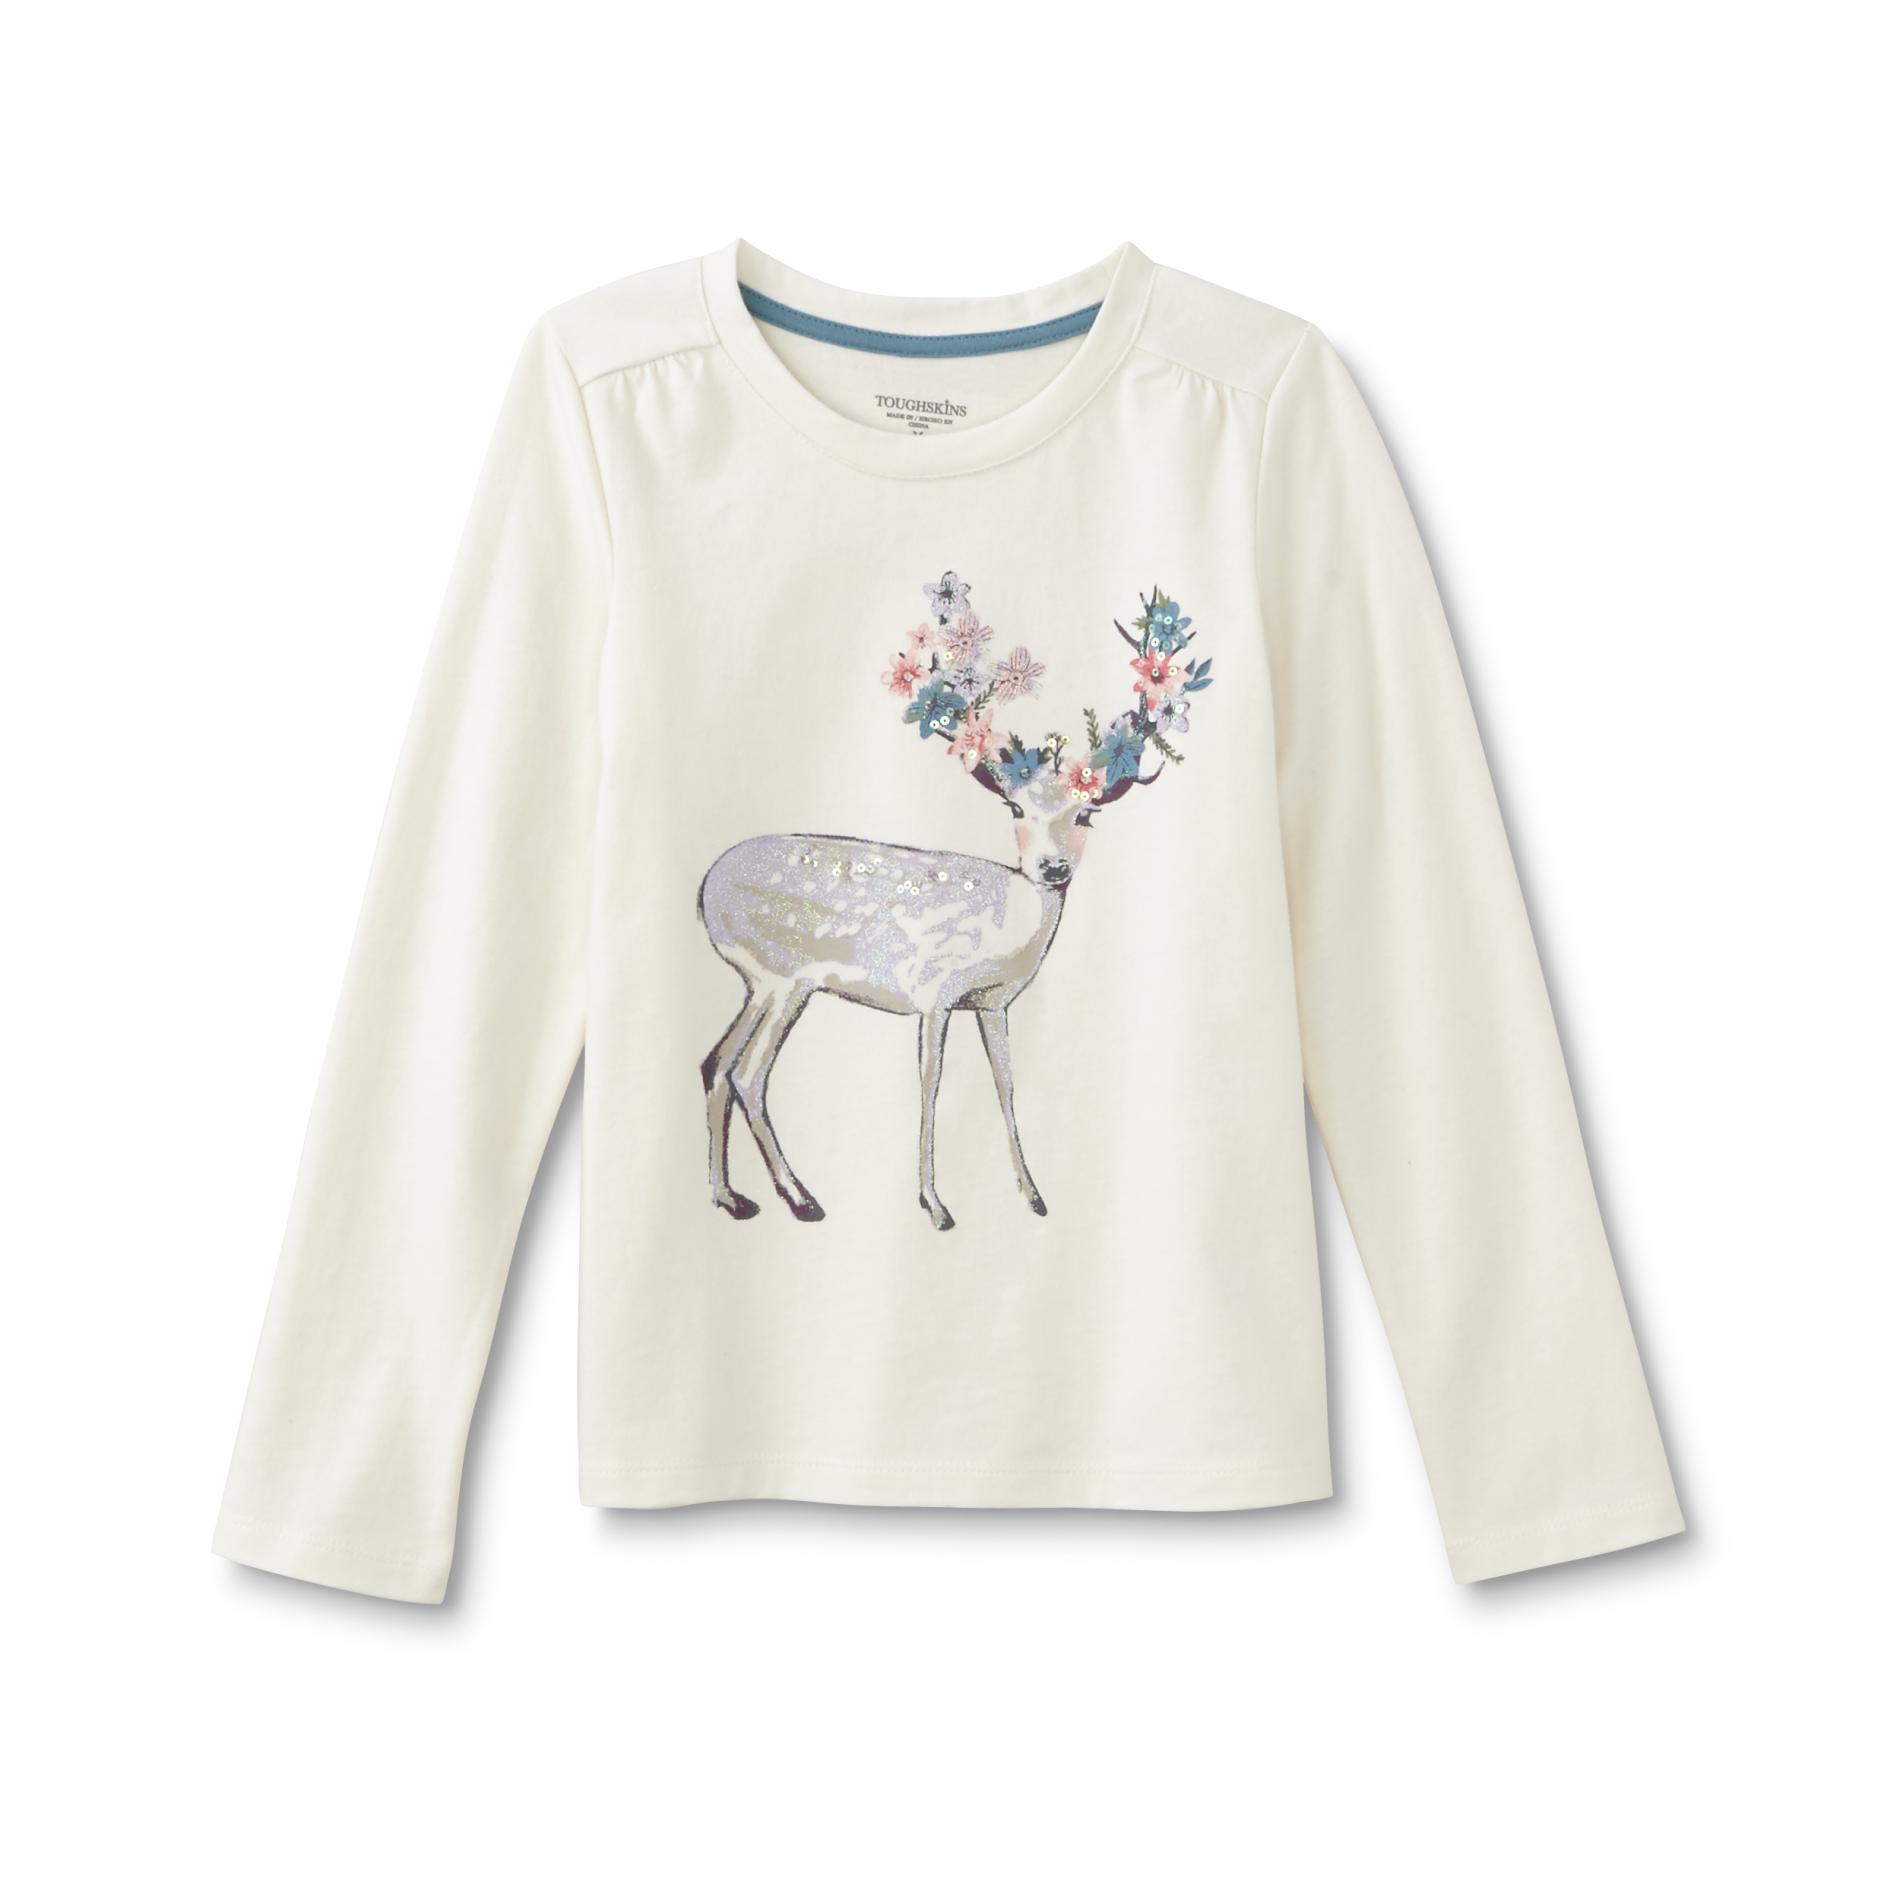 Toughskins Girl's Long-Sleeve Graphic T-Shirt - Deer